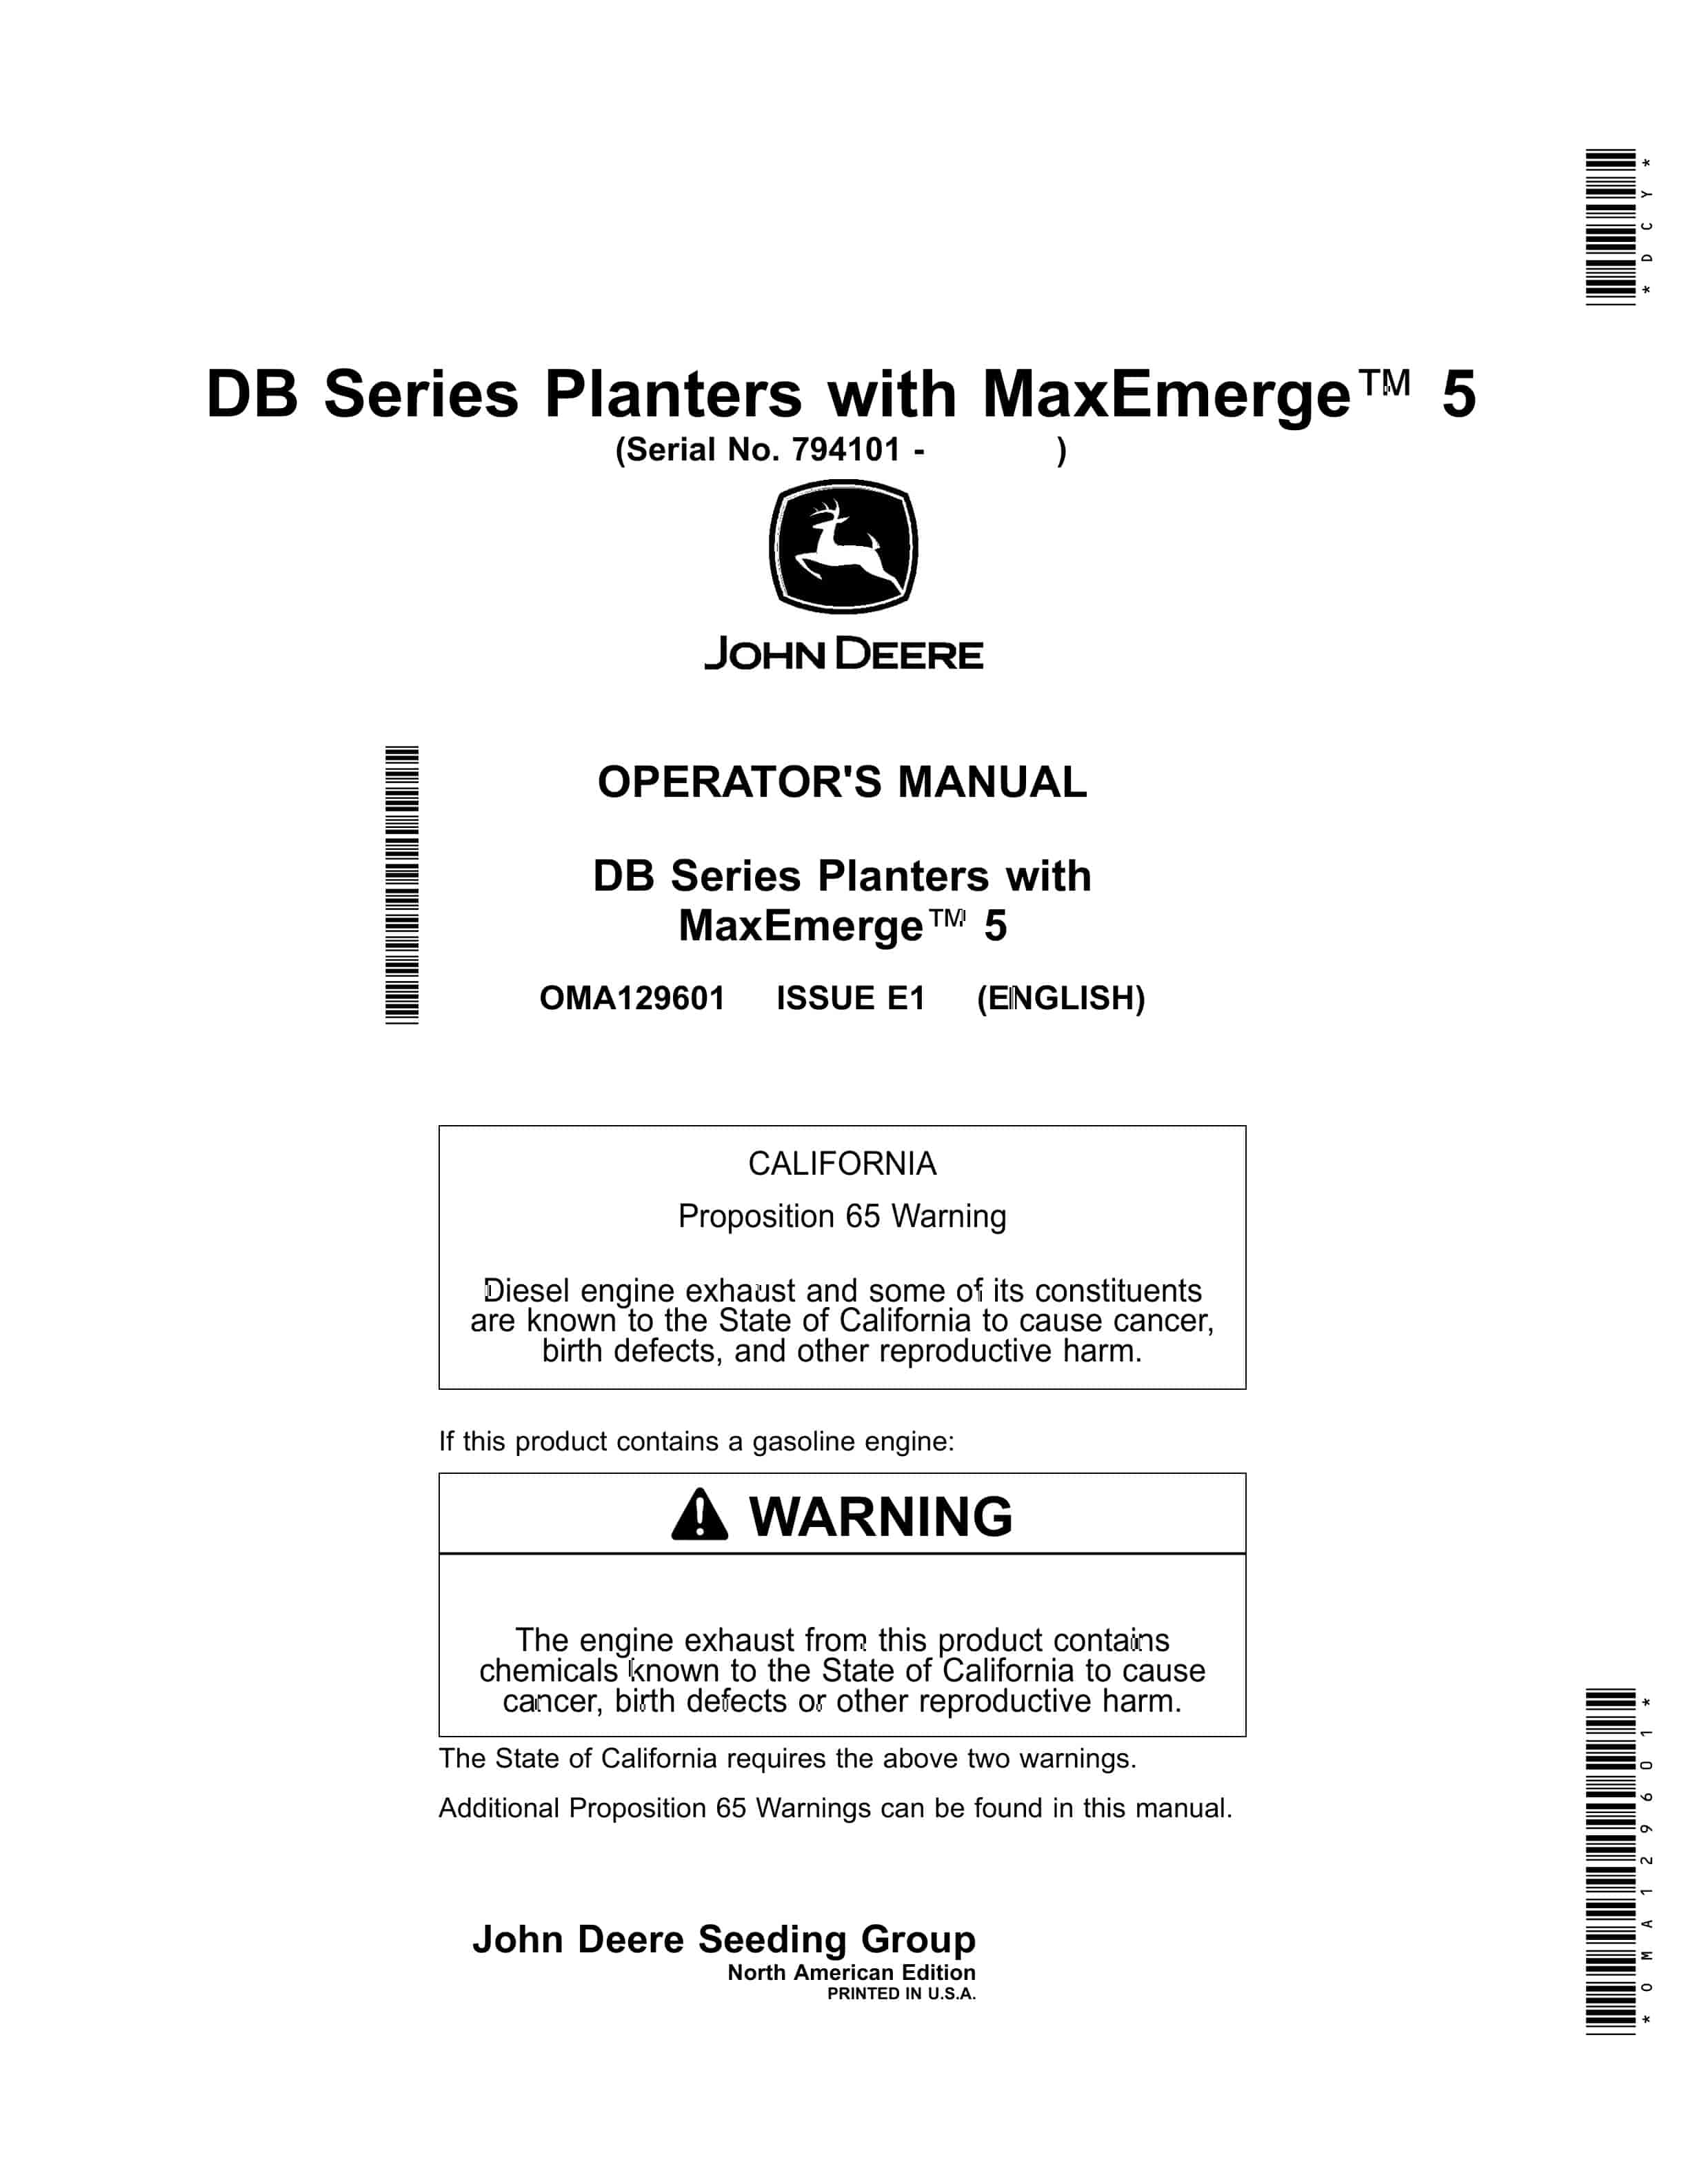 John Deere DB Series Planters with MaxEmerge 5 Operator Manual OMA129601 1